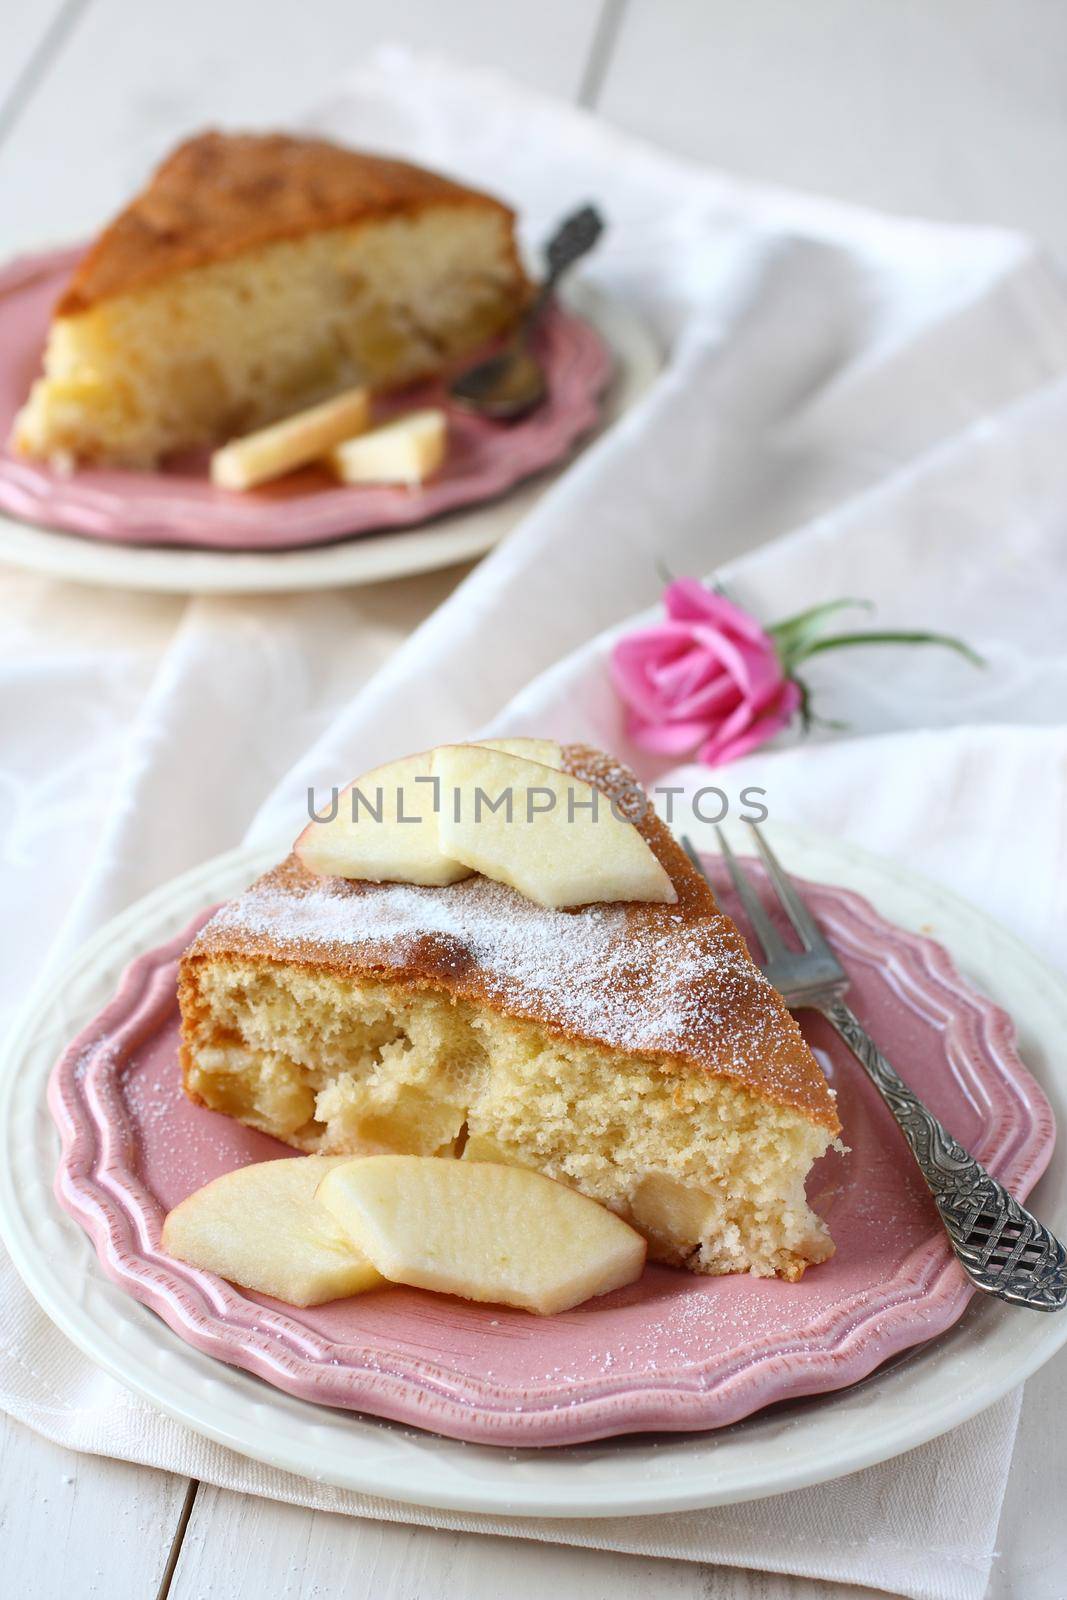 Slice of homemade apple sponge cake on pink plate